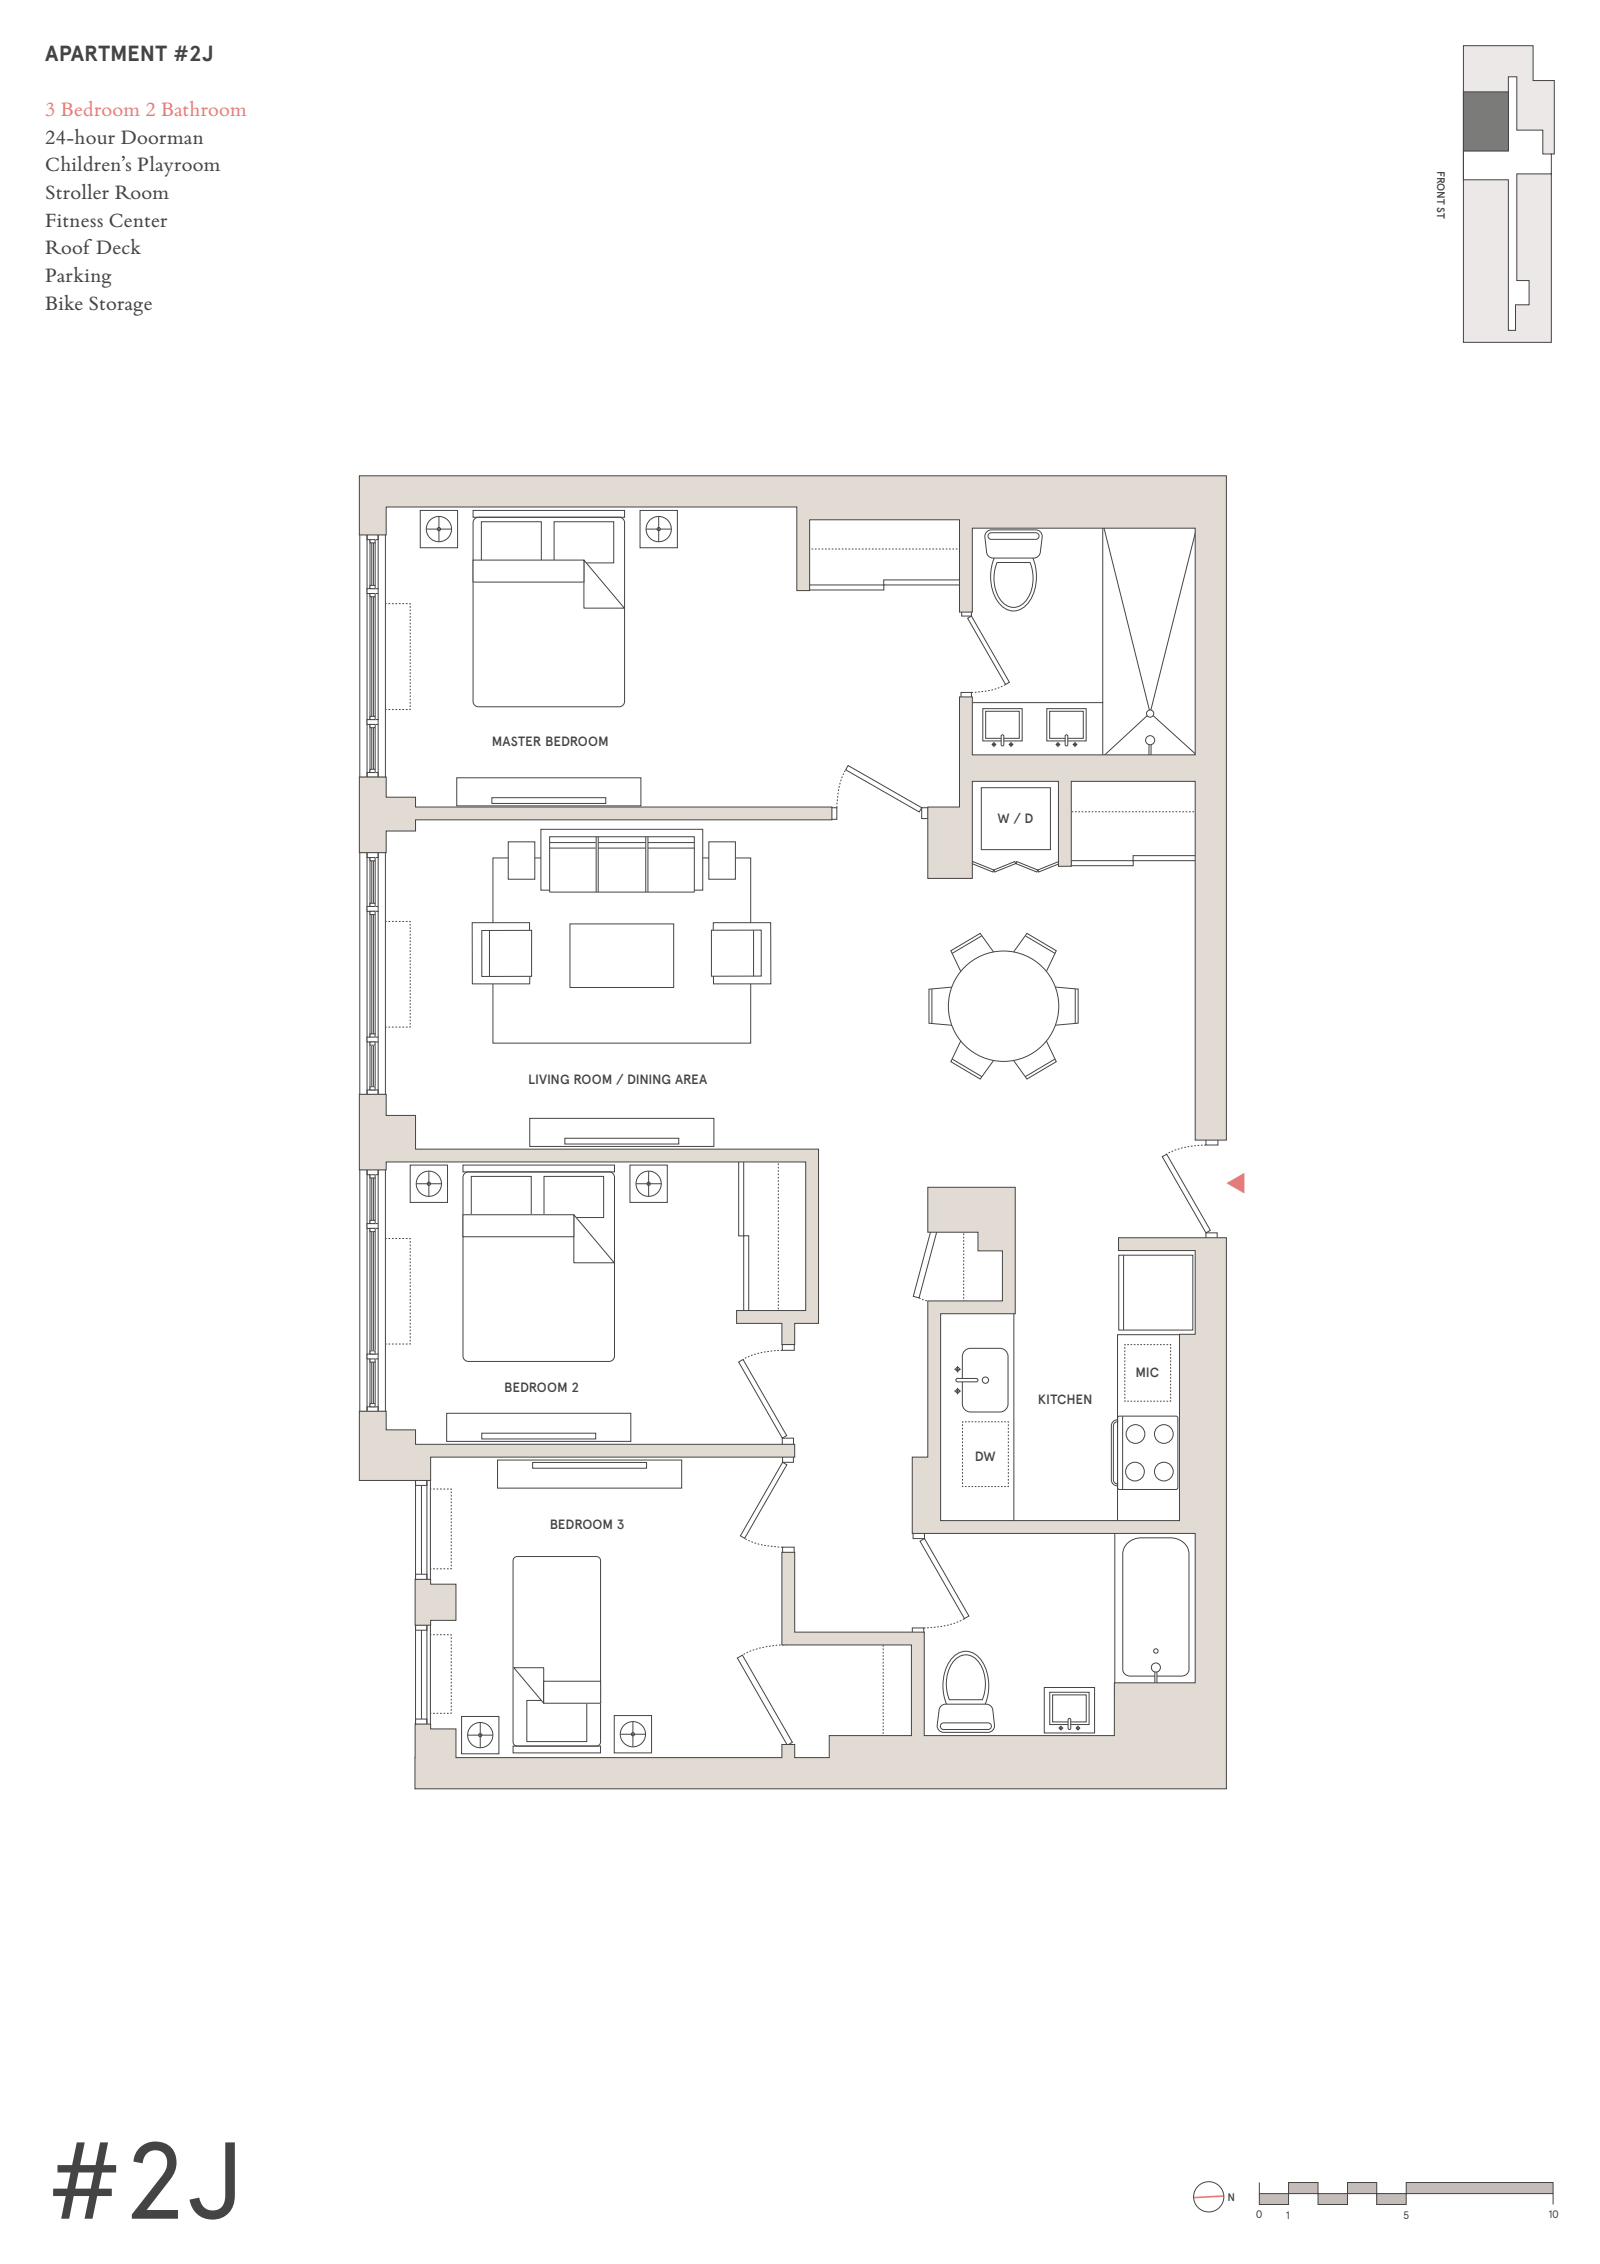 Floorplan for 181 Front Street, 2J